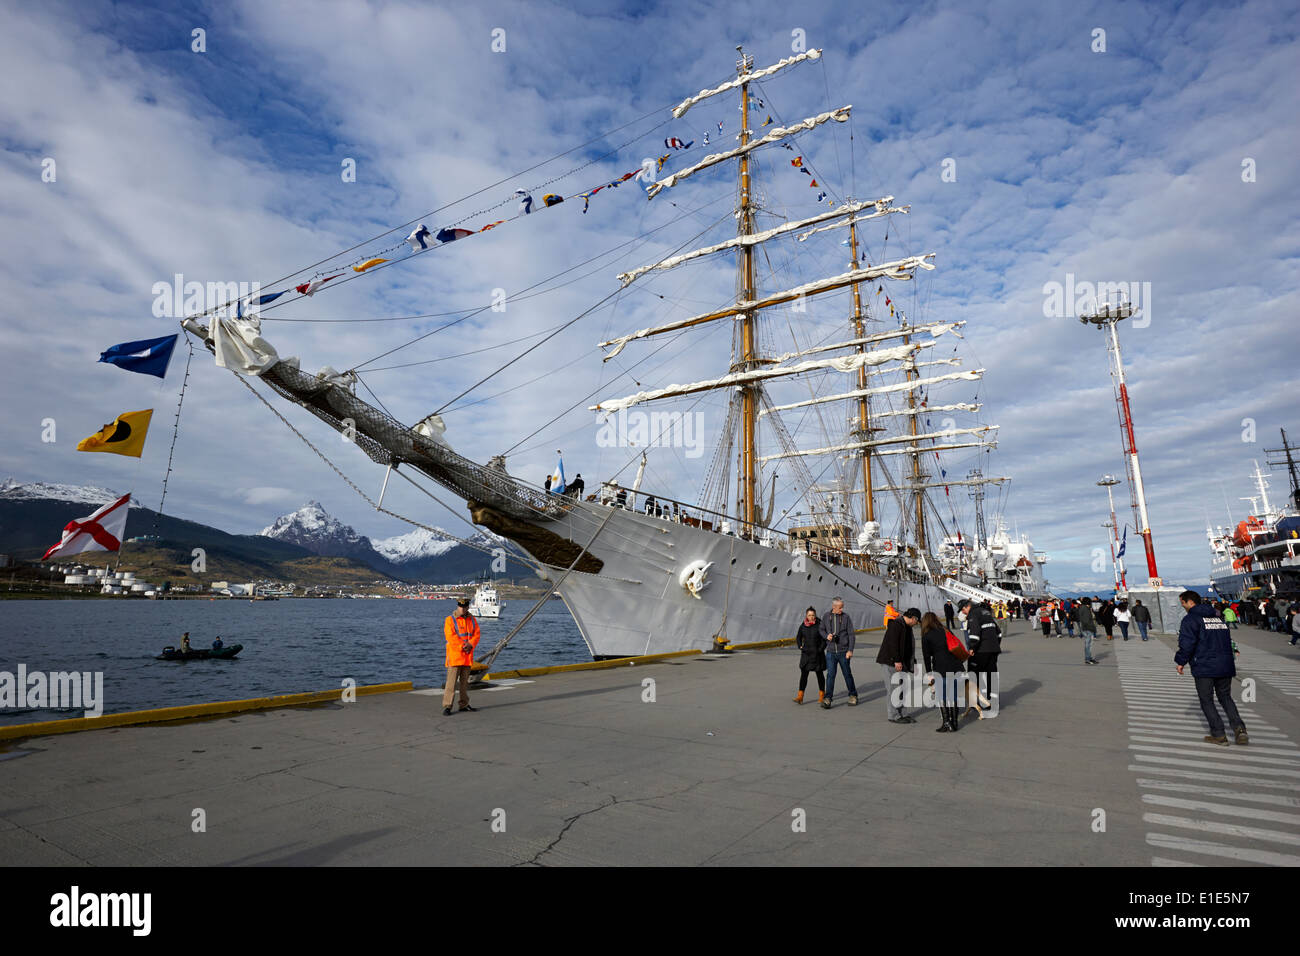 ara libertad latin american navy sail training ships moored in Ushuaia Argentina part of velas latinoamerican 2014 Stock Photo